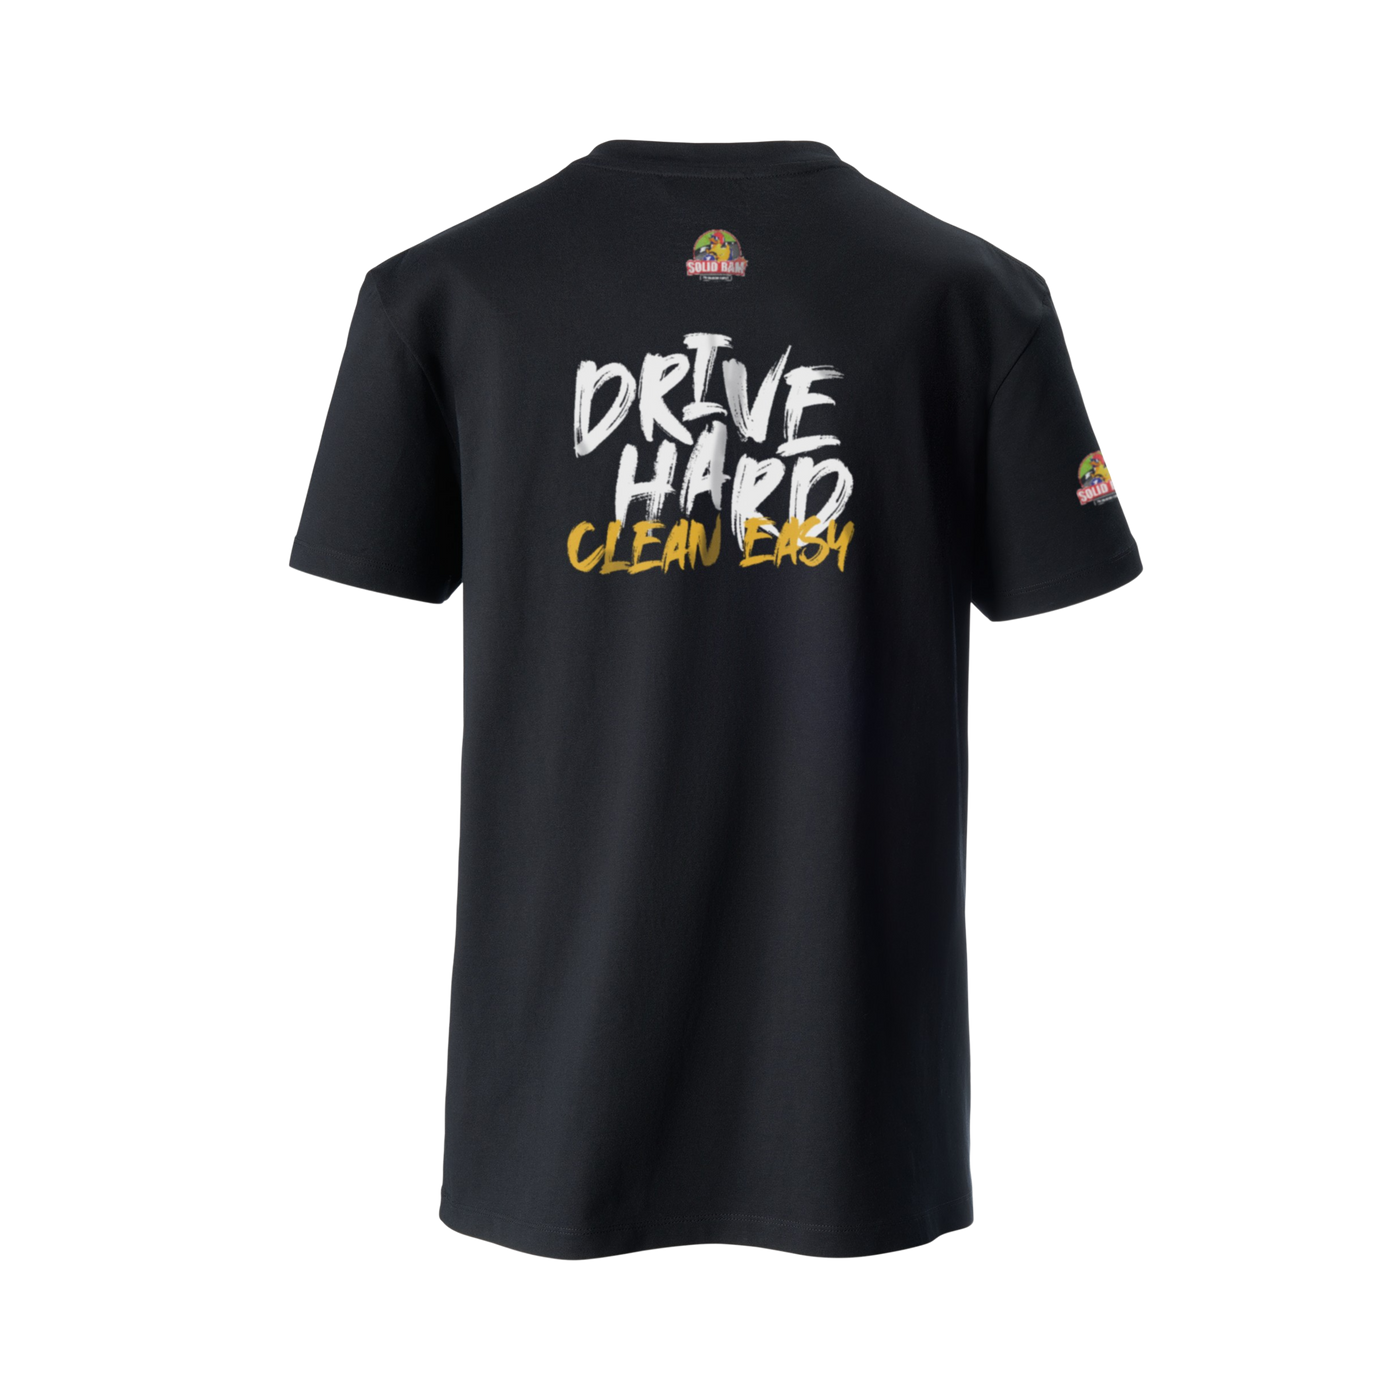 "Drive Hard Clean Easy" t-shirt black unisex